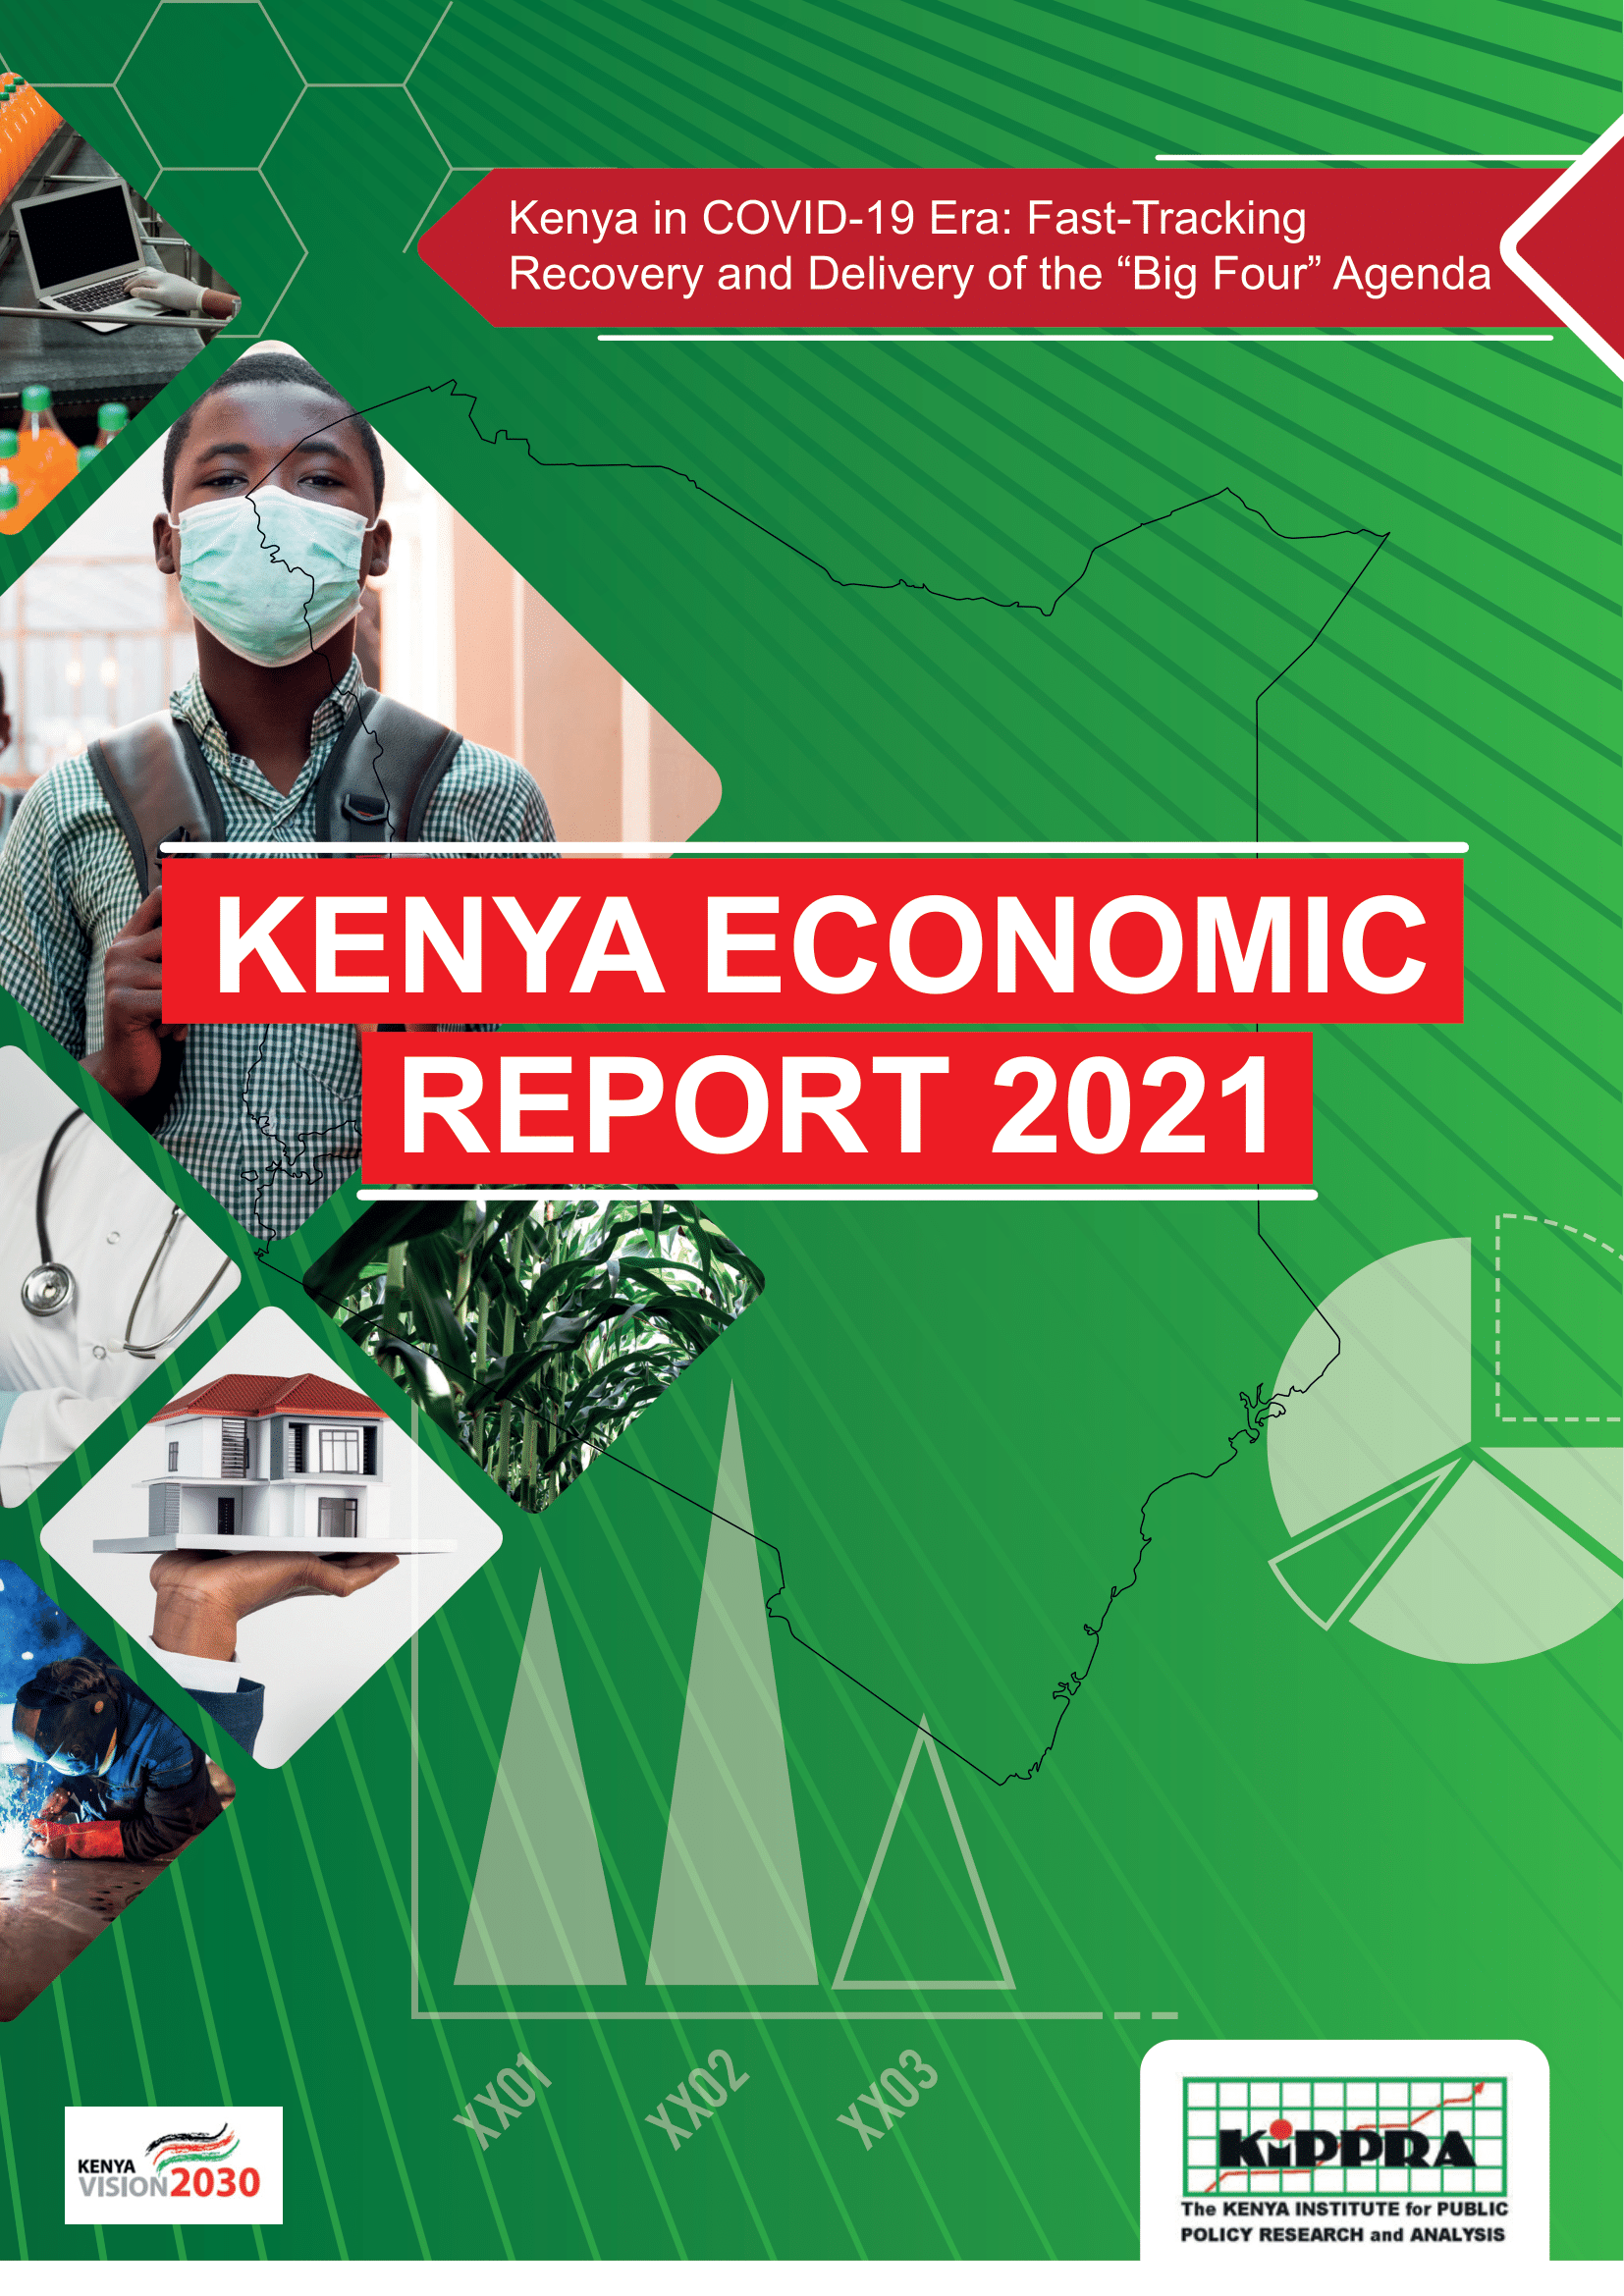 KENYA ECONOMIC REPORT 2021